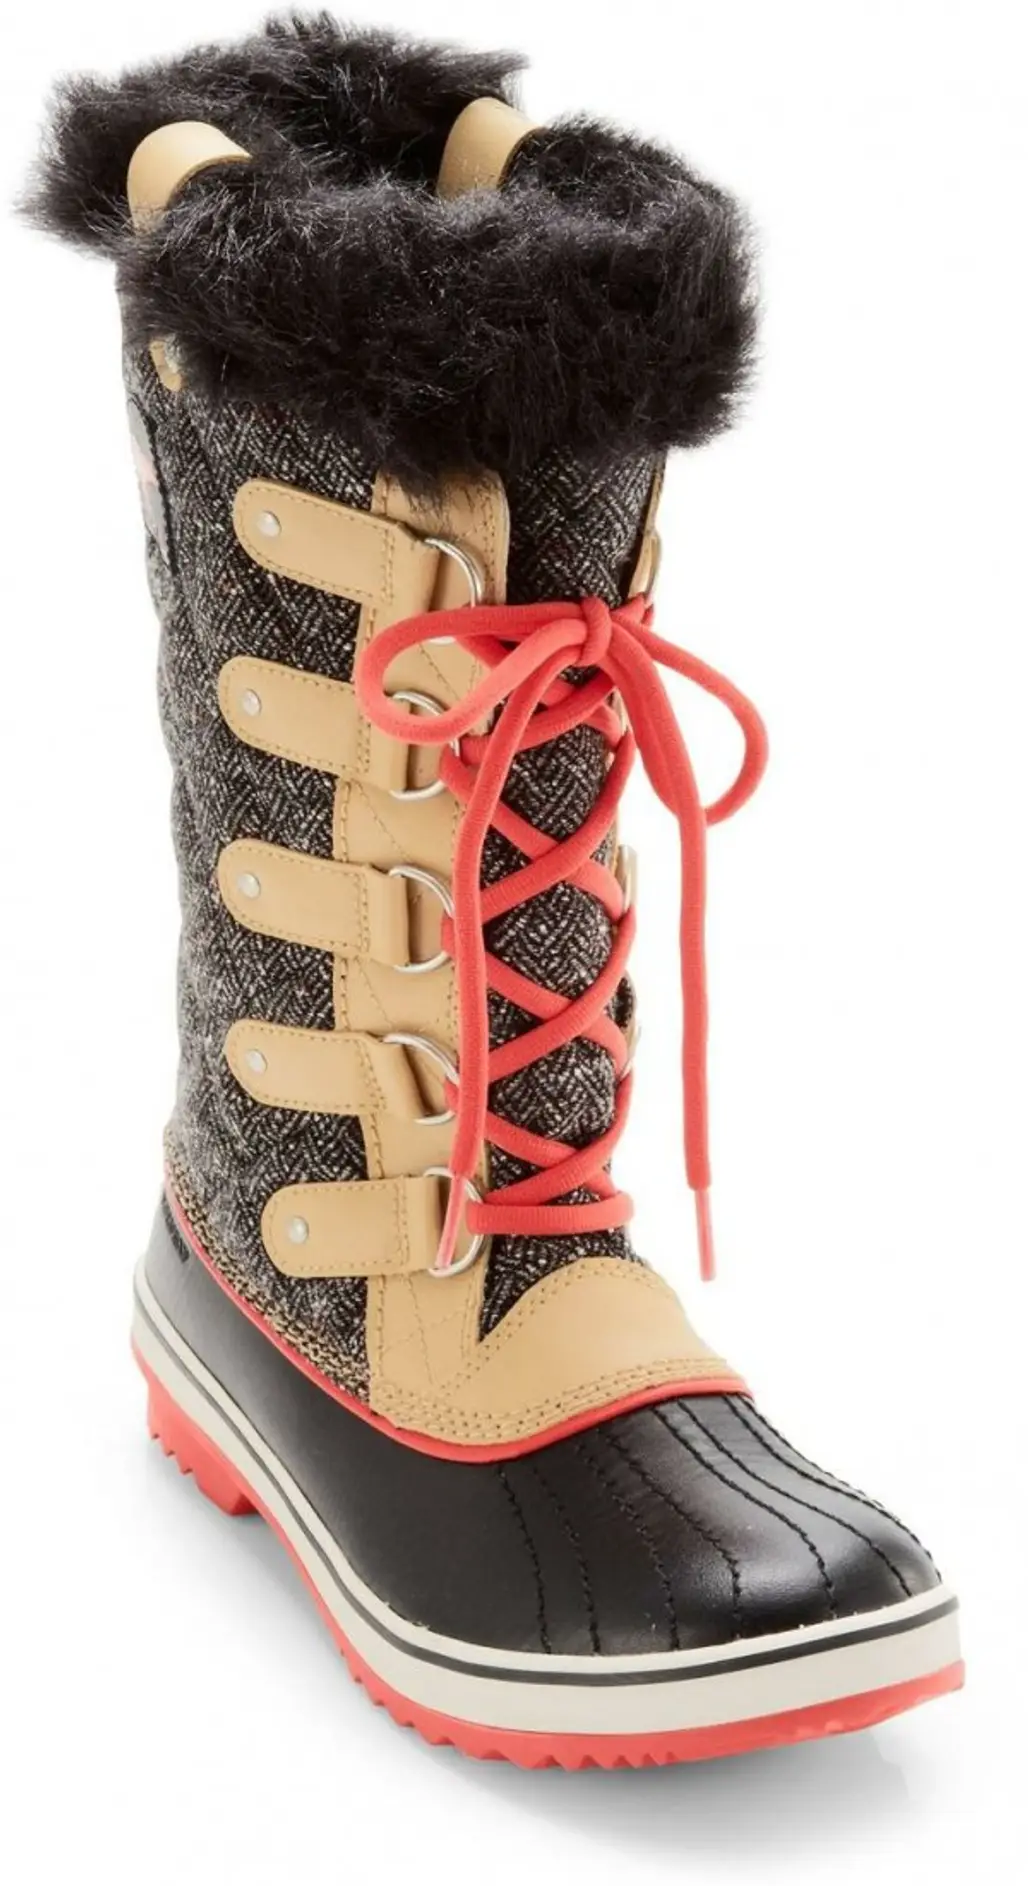 footwear,boot,shoe,sneakers,snow boot,